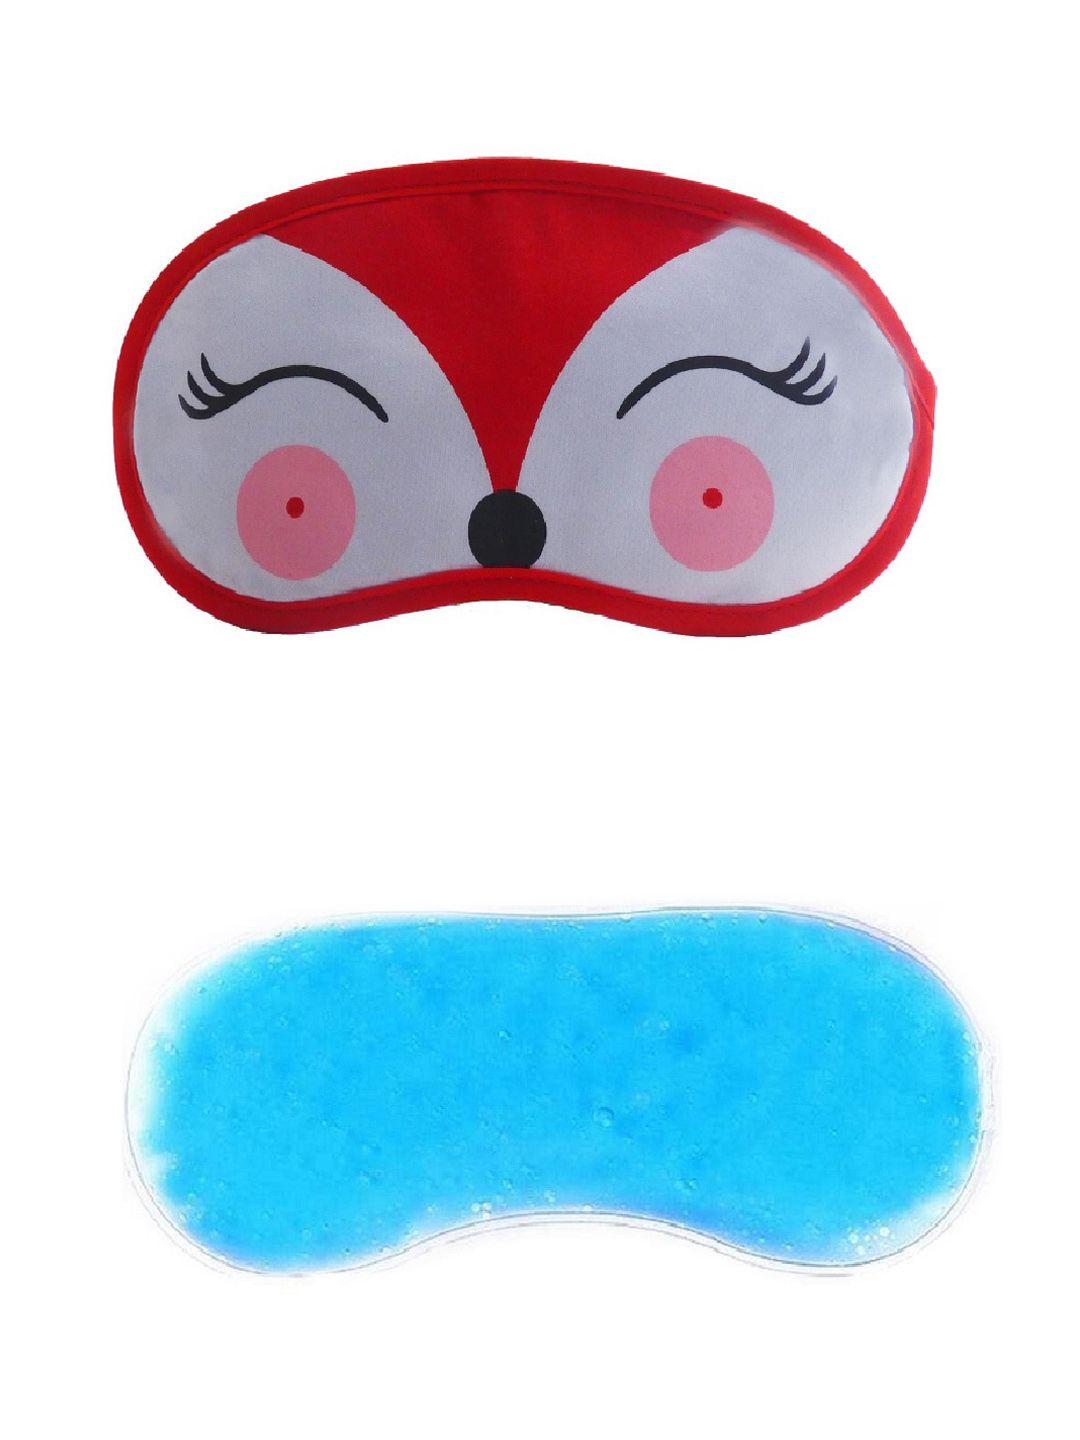 jenna red printed deer sleeping eye mask with cooling ice gel